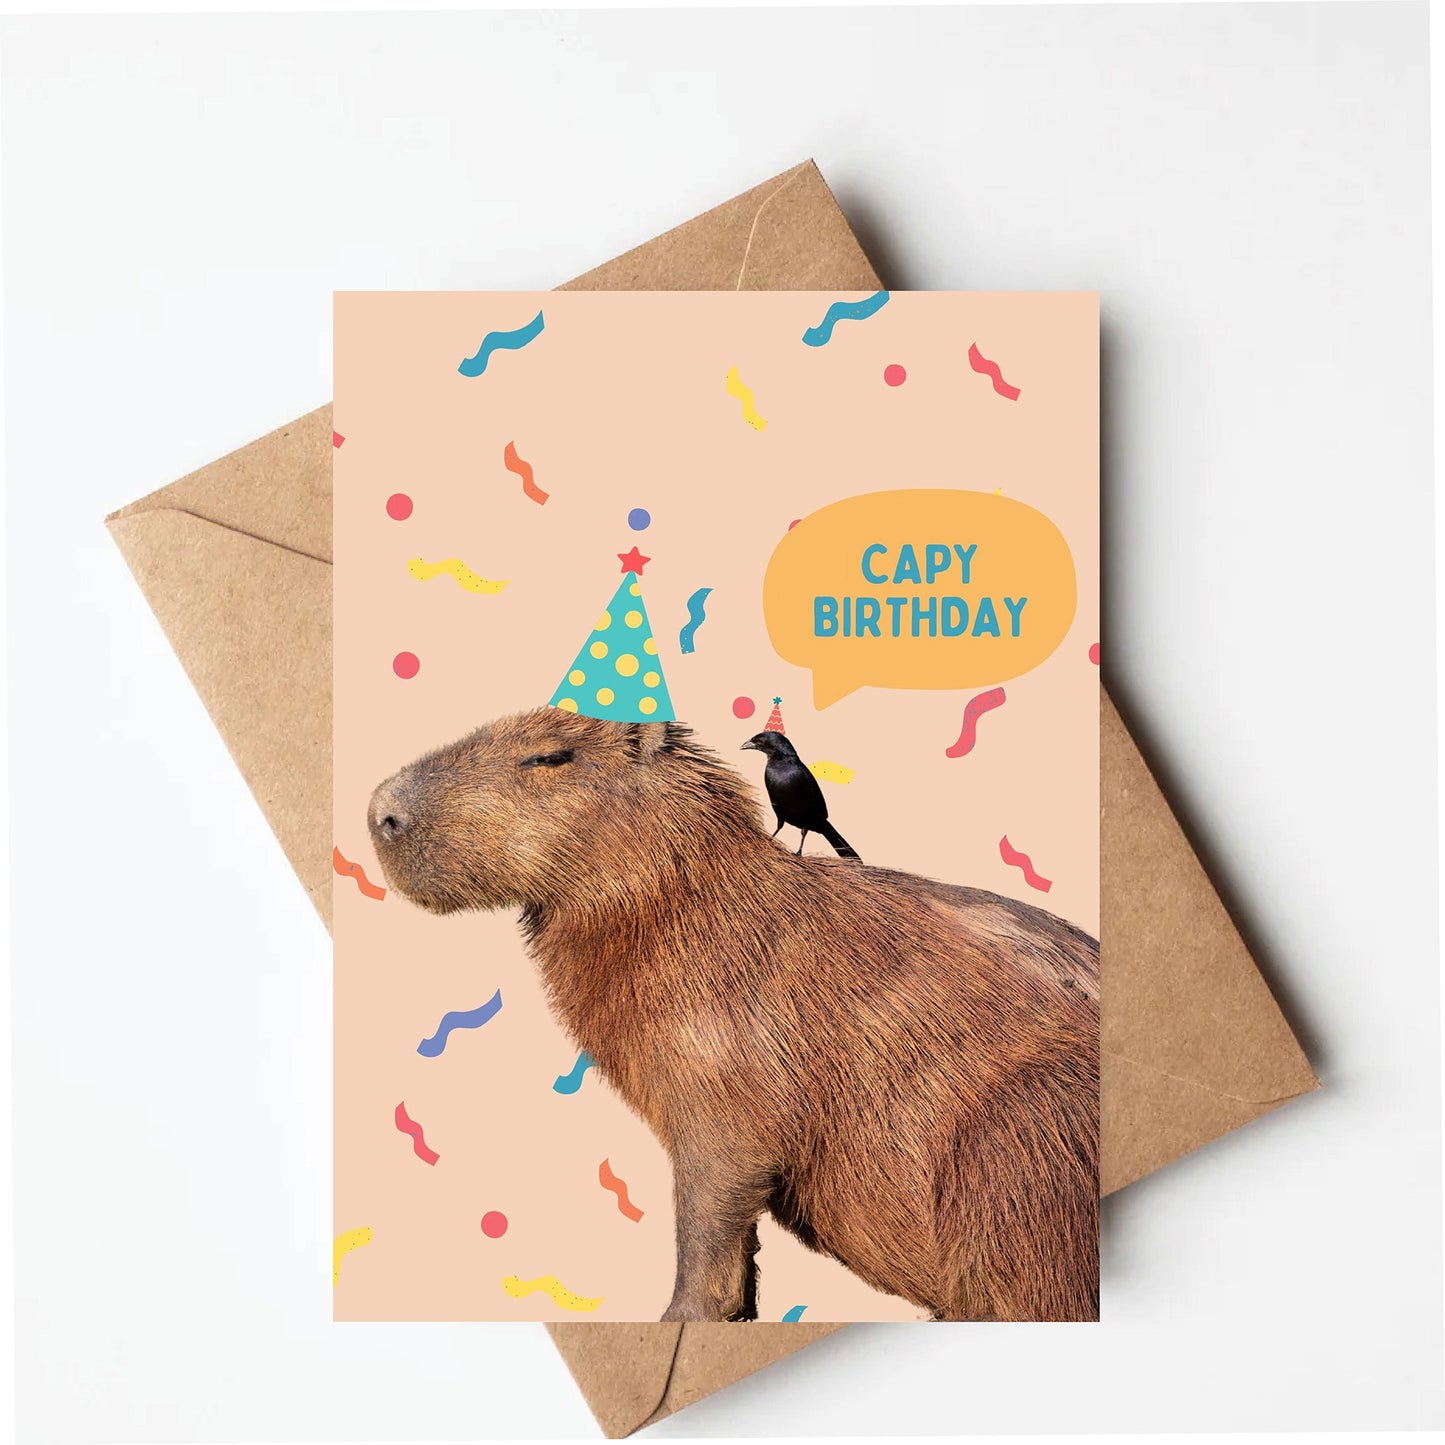 Capybara birthday card